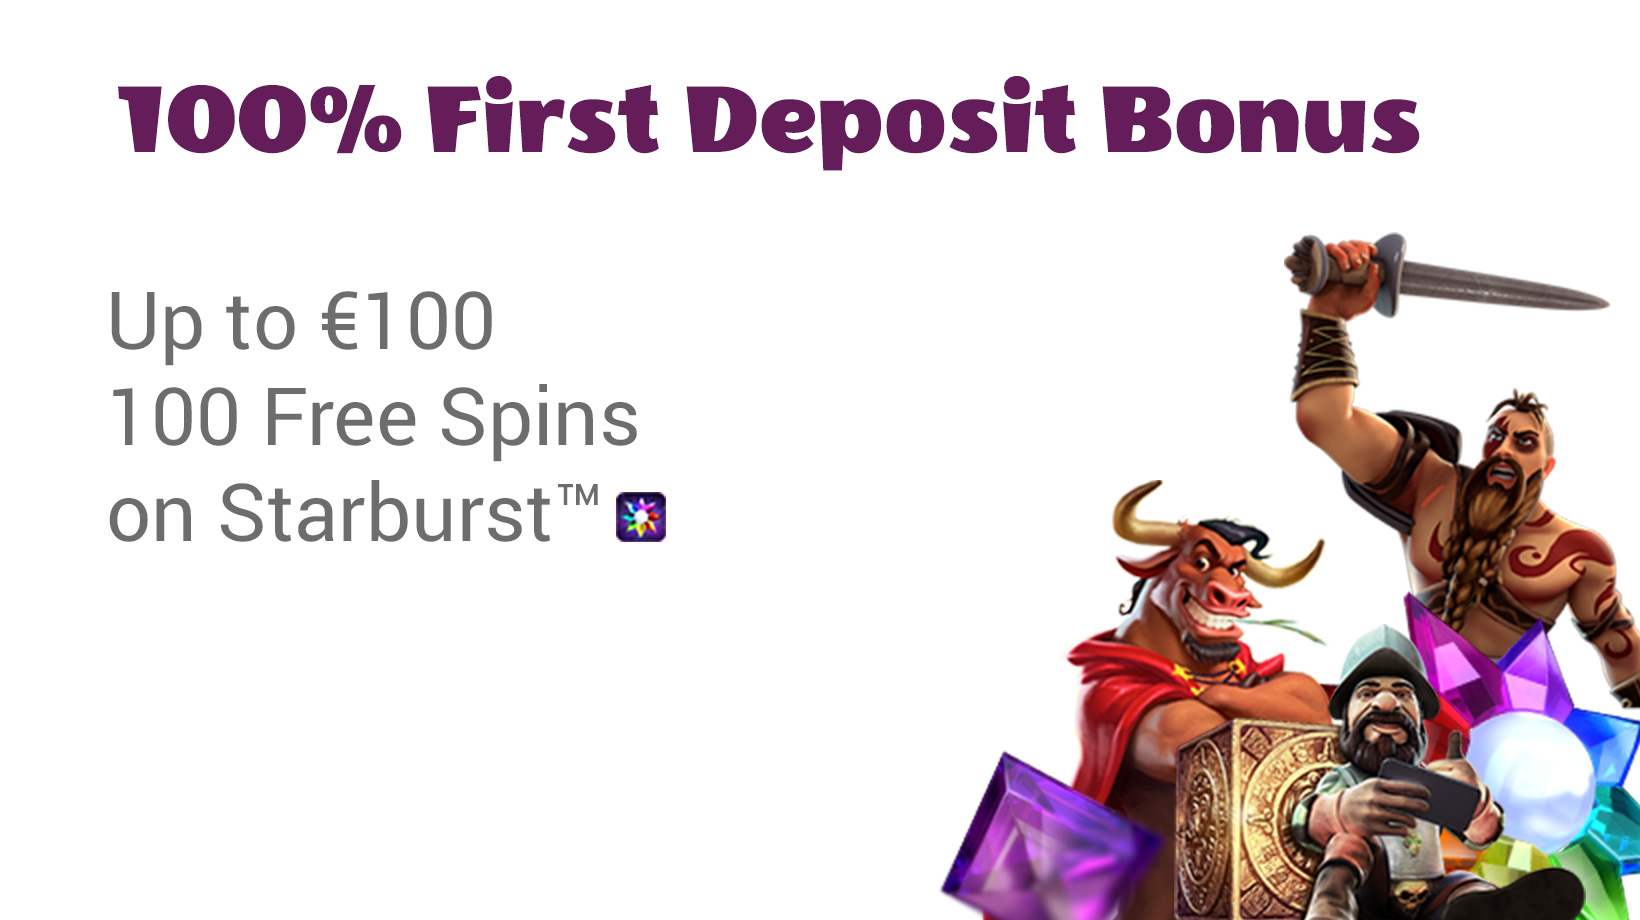 First Deposit Bonus up to €100 + 100 Free Spins on Starburst™